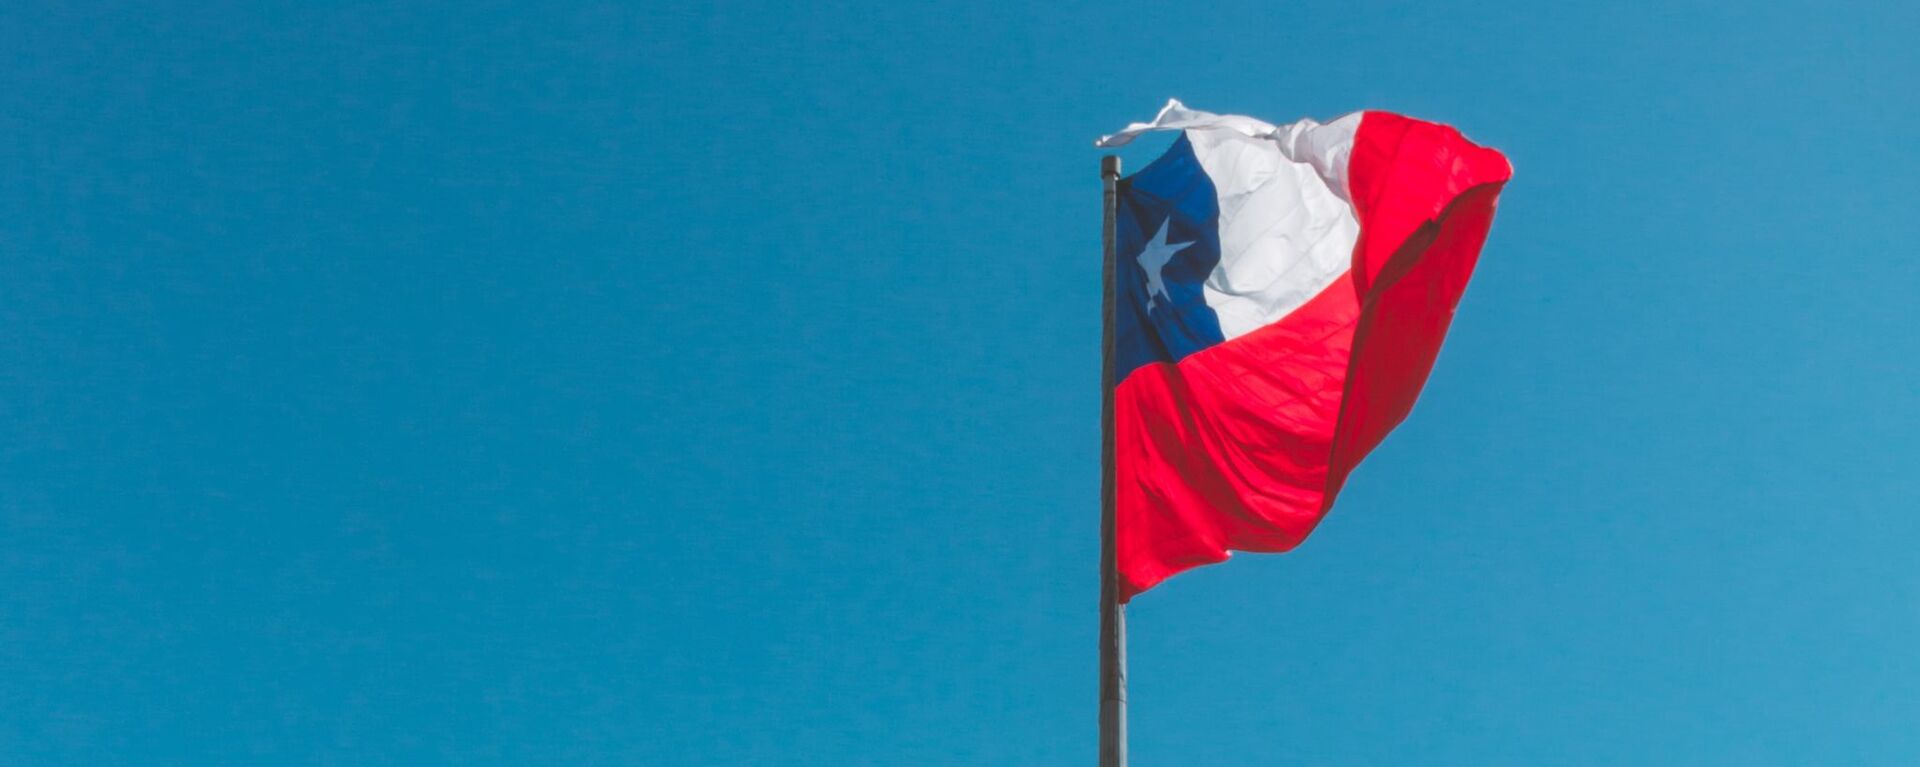 La bandera de Chile - Sputnik Mundo, 1920, 19.07.2021